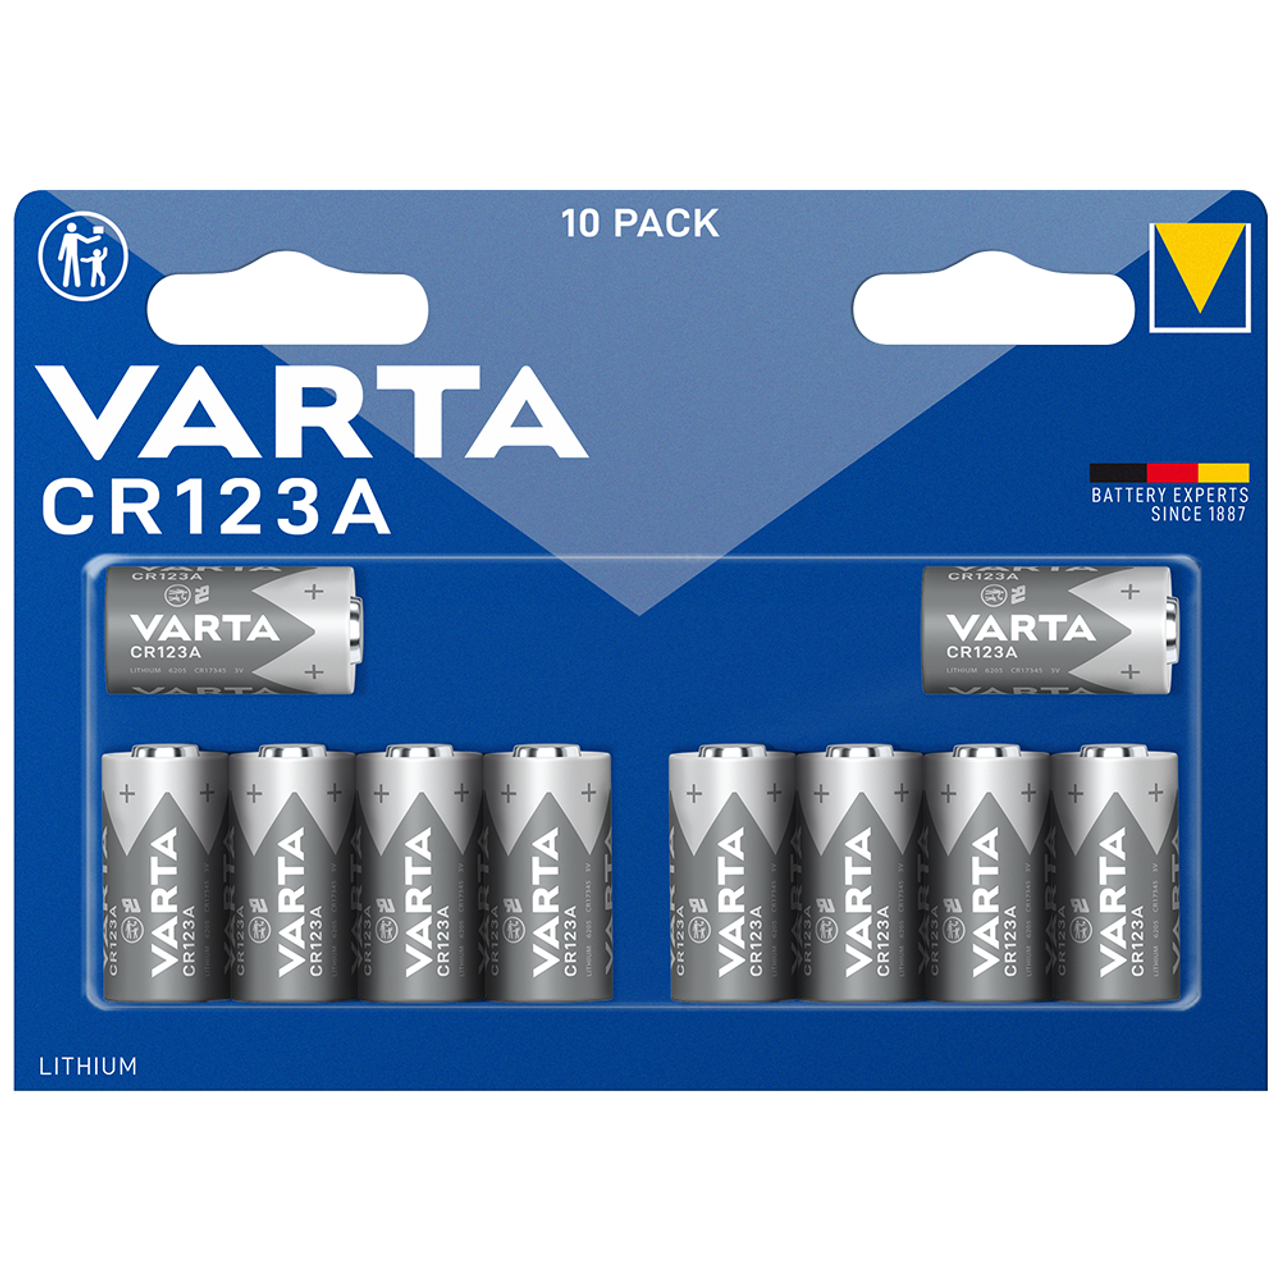 Varta CR123 Lithium Battery